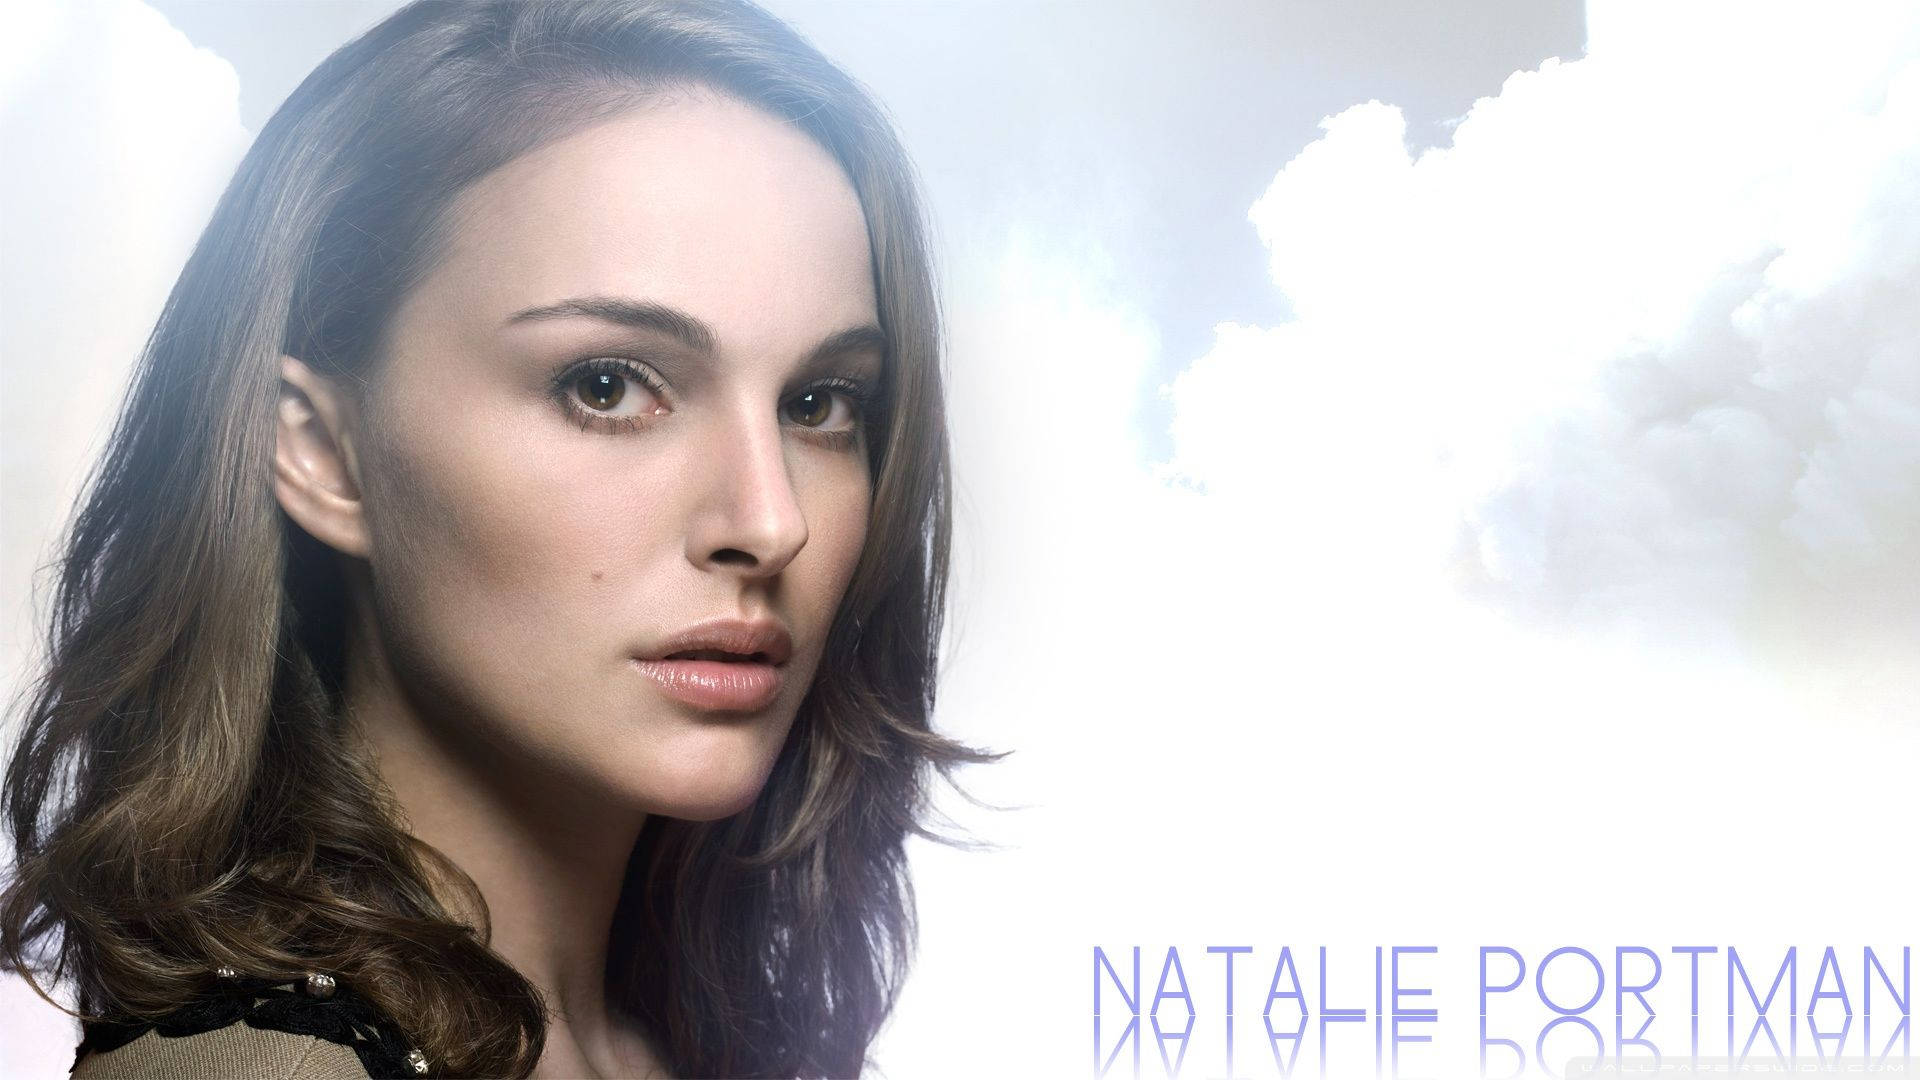 Natalie Portman On A Cloudy Background